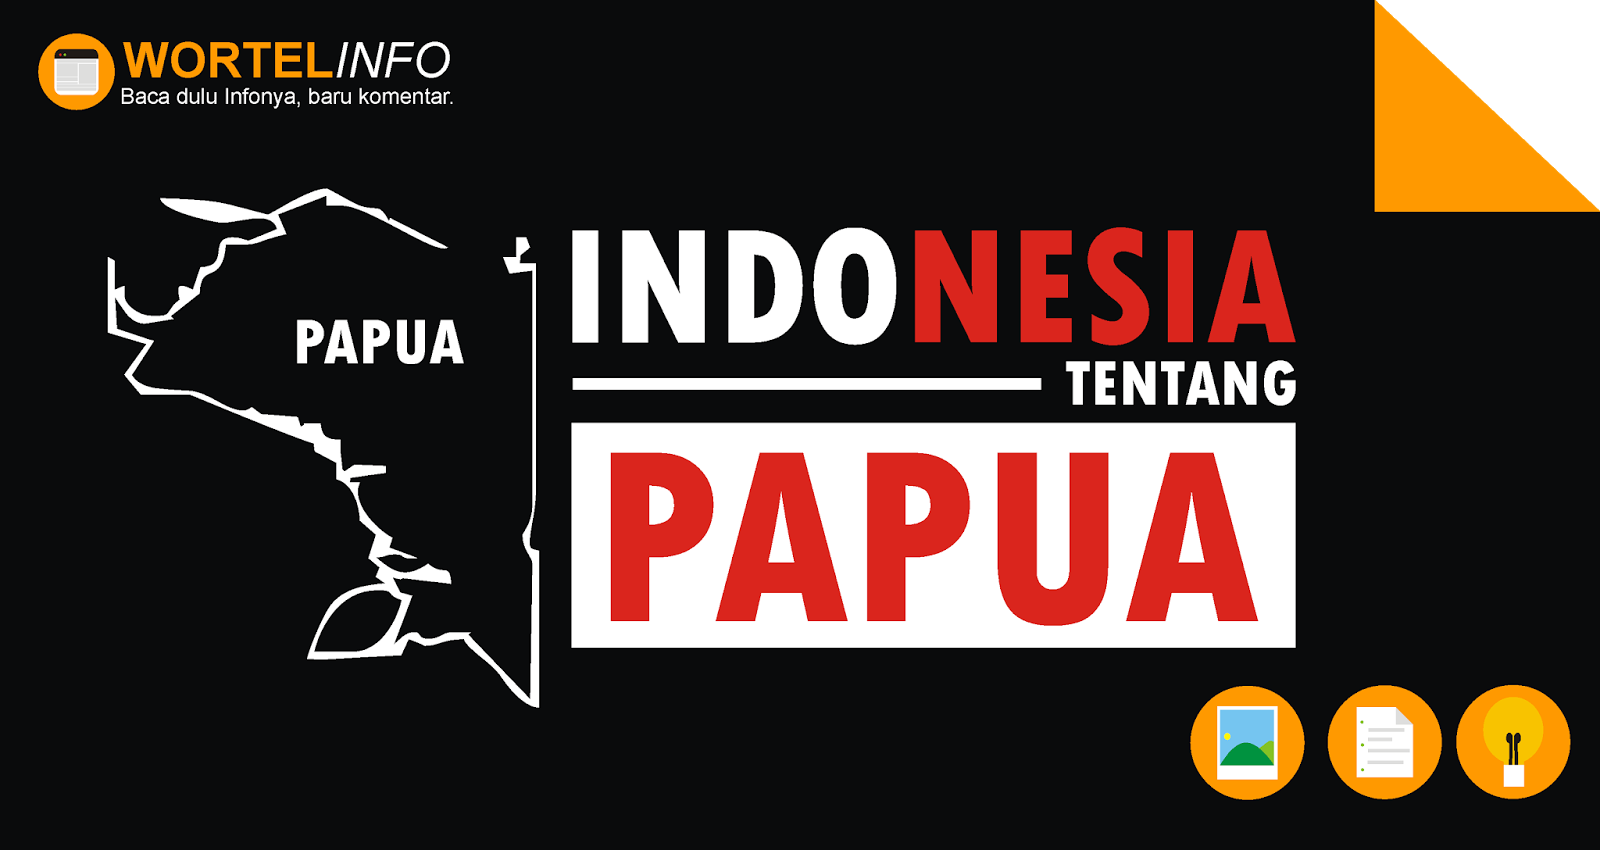 Indonesia Papua TULISAN WORTEL